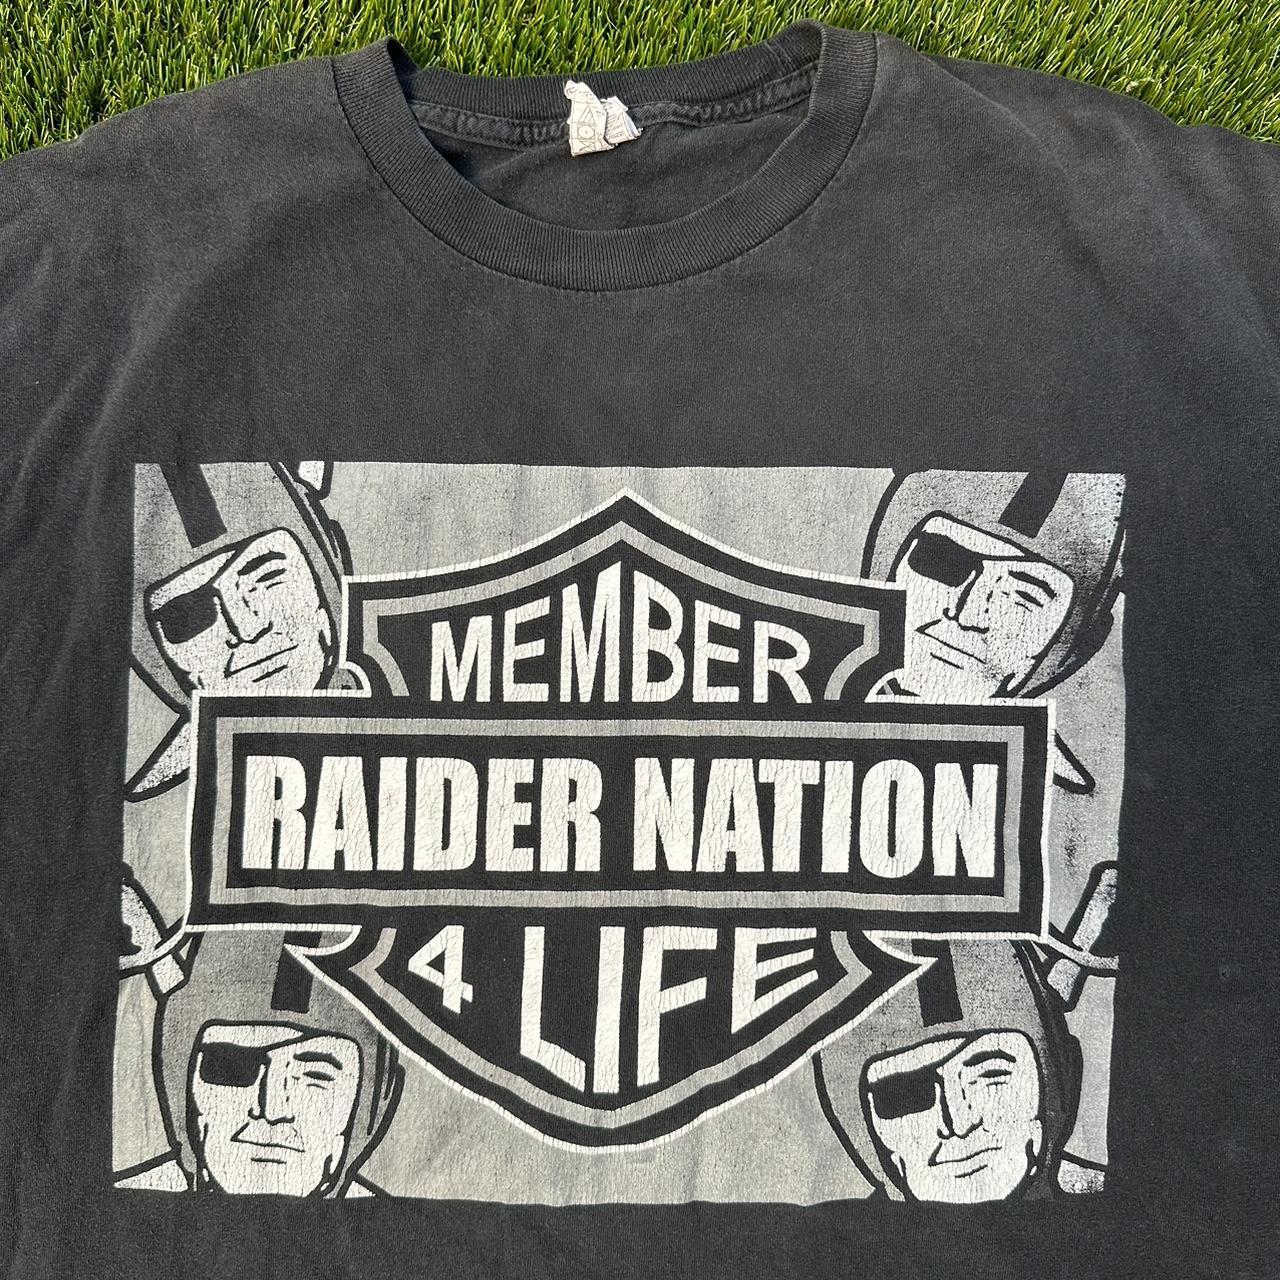 Raiders 4 Life. #RaiderNation  Raiders shirt, Raiders t shirt